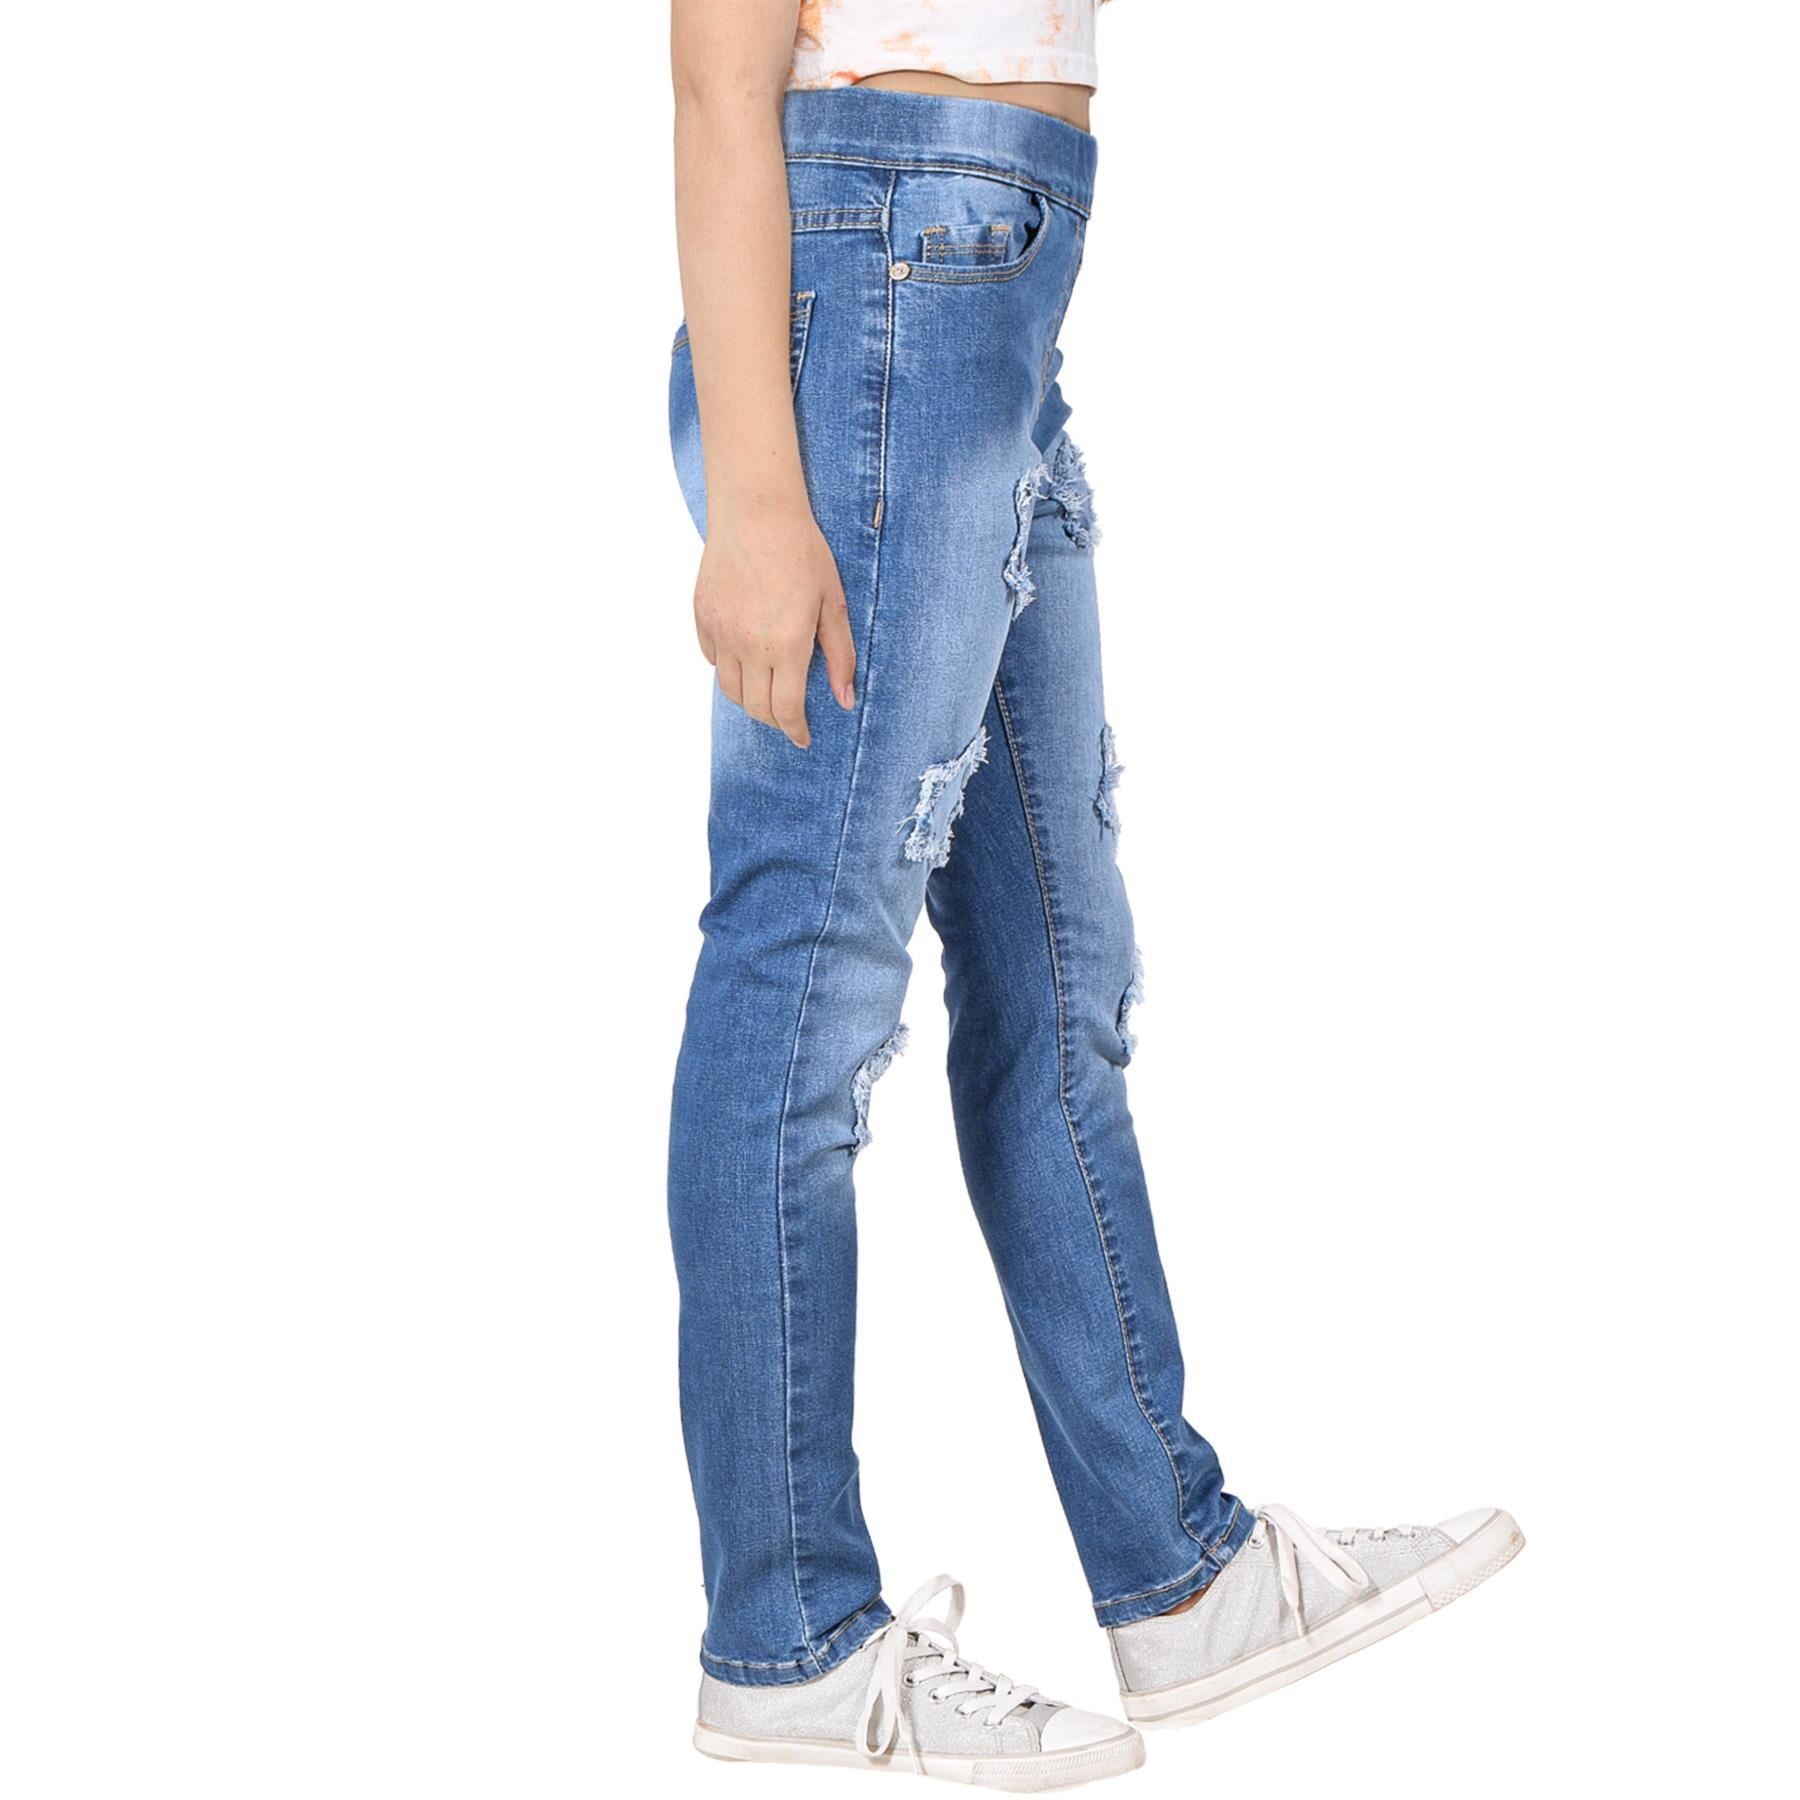 Kids Girls Comfort Stretchy Stars Ripped Fashion Denim Jeans